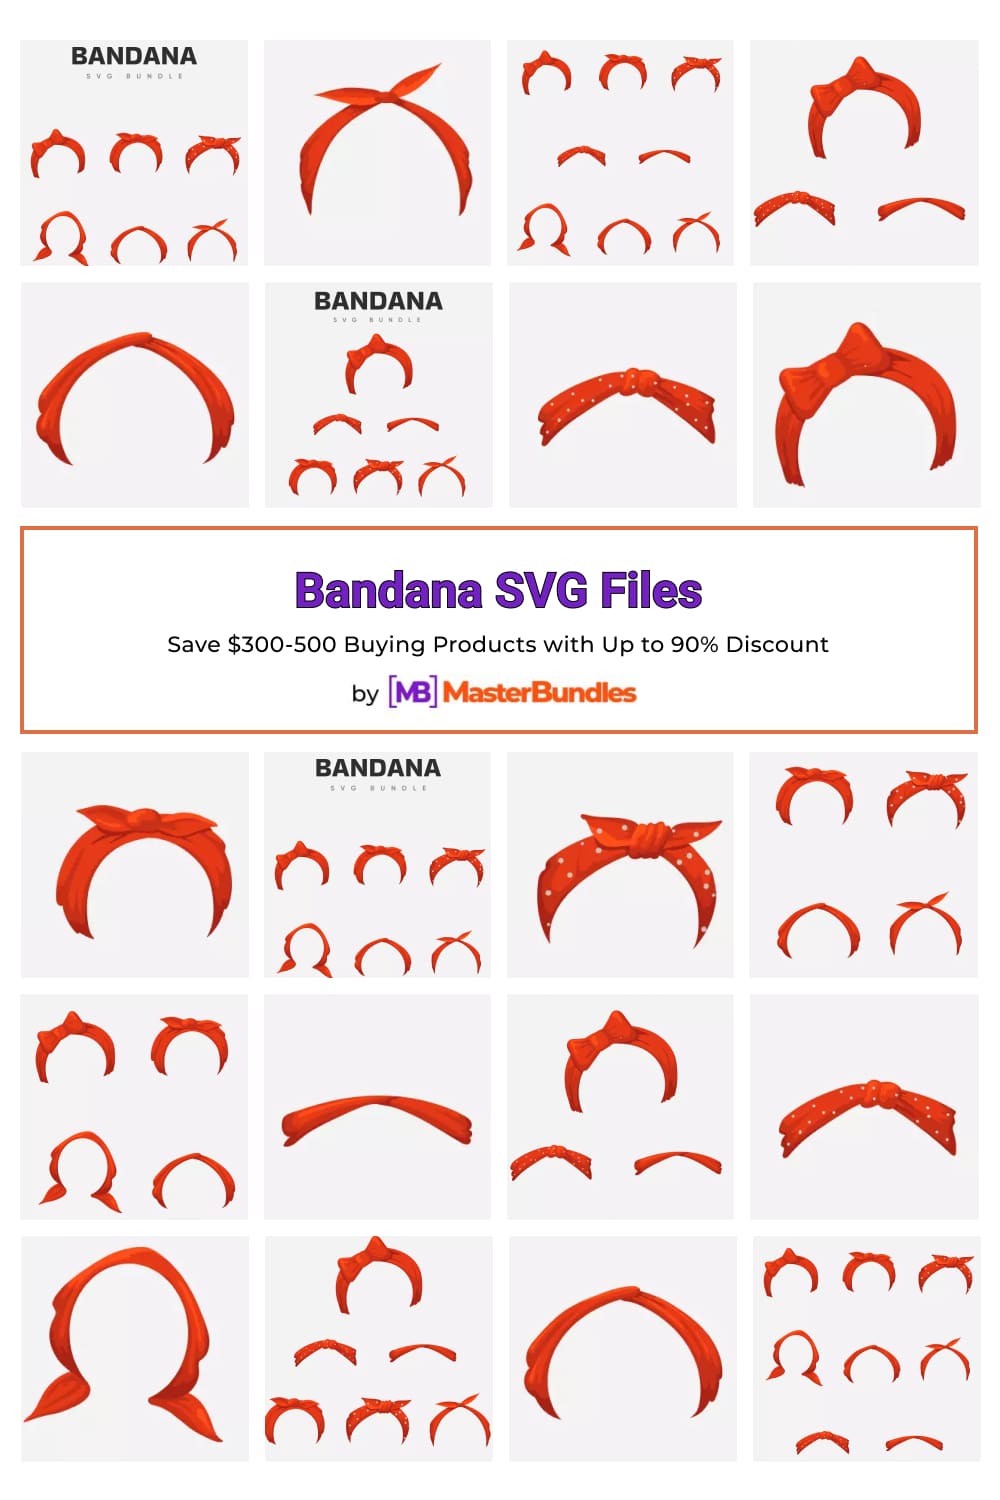 Bandana SVG Files Pinterest image.